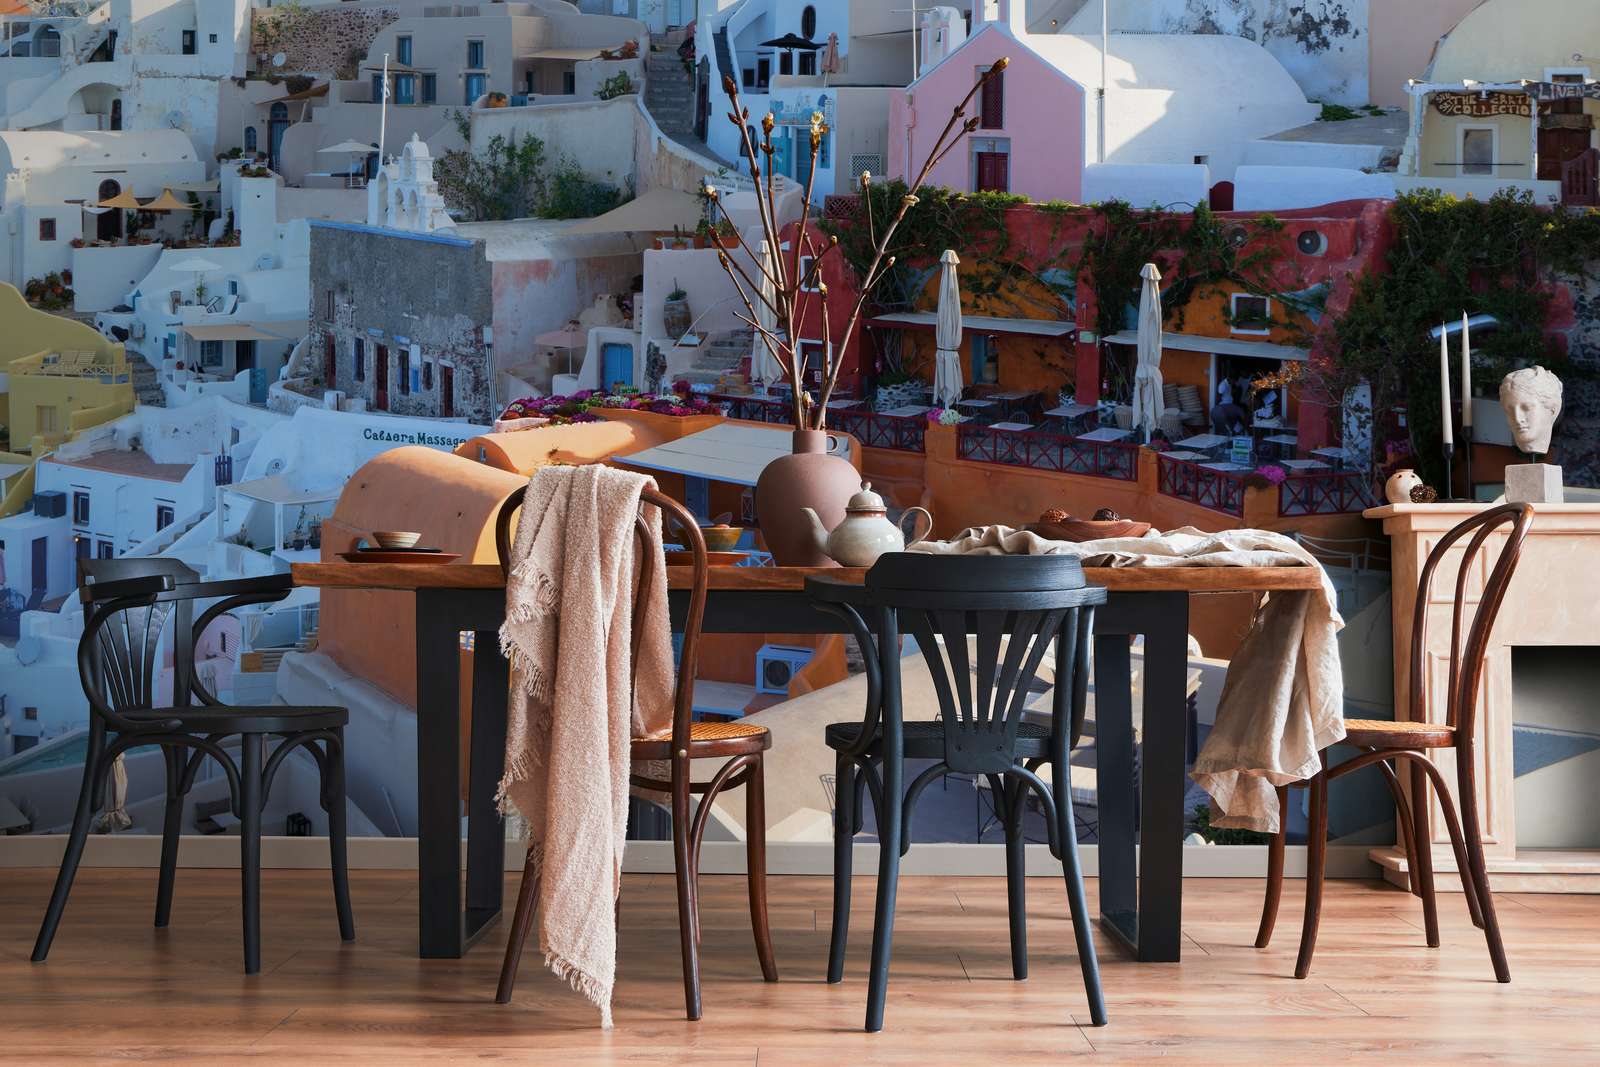             Fototapete Häuser von Santorini – Premium Glattvlies
        